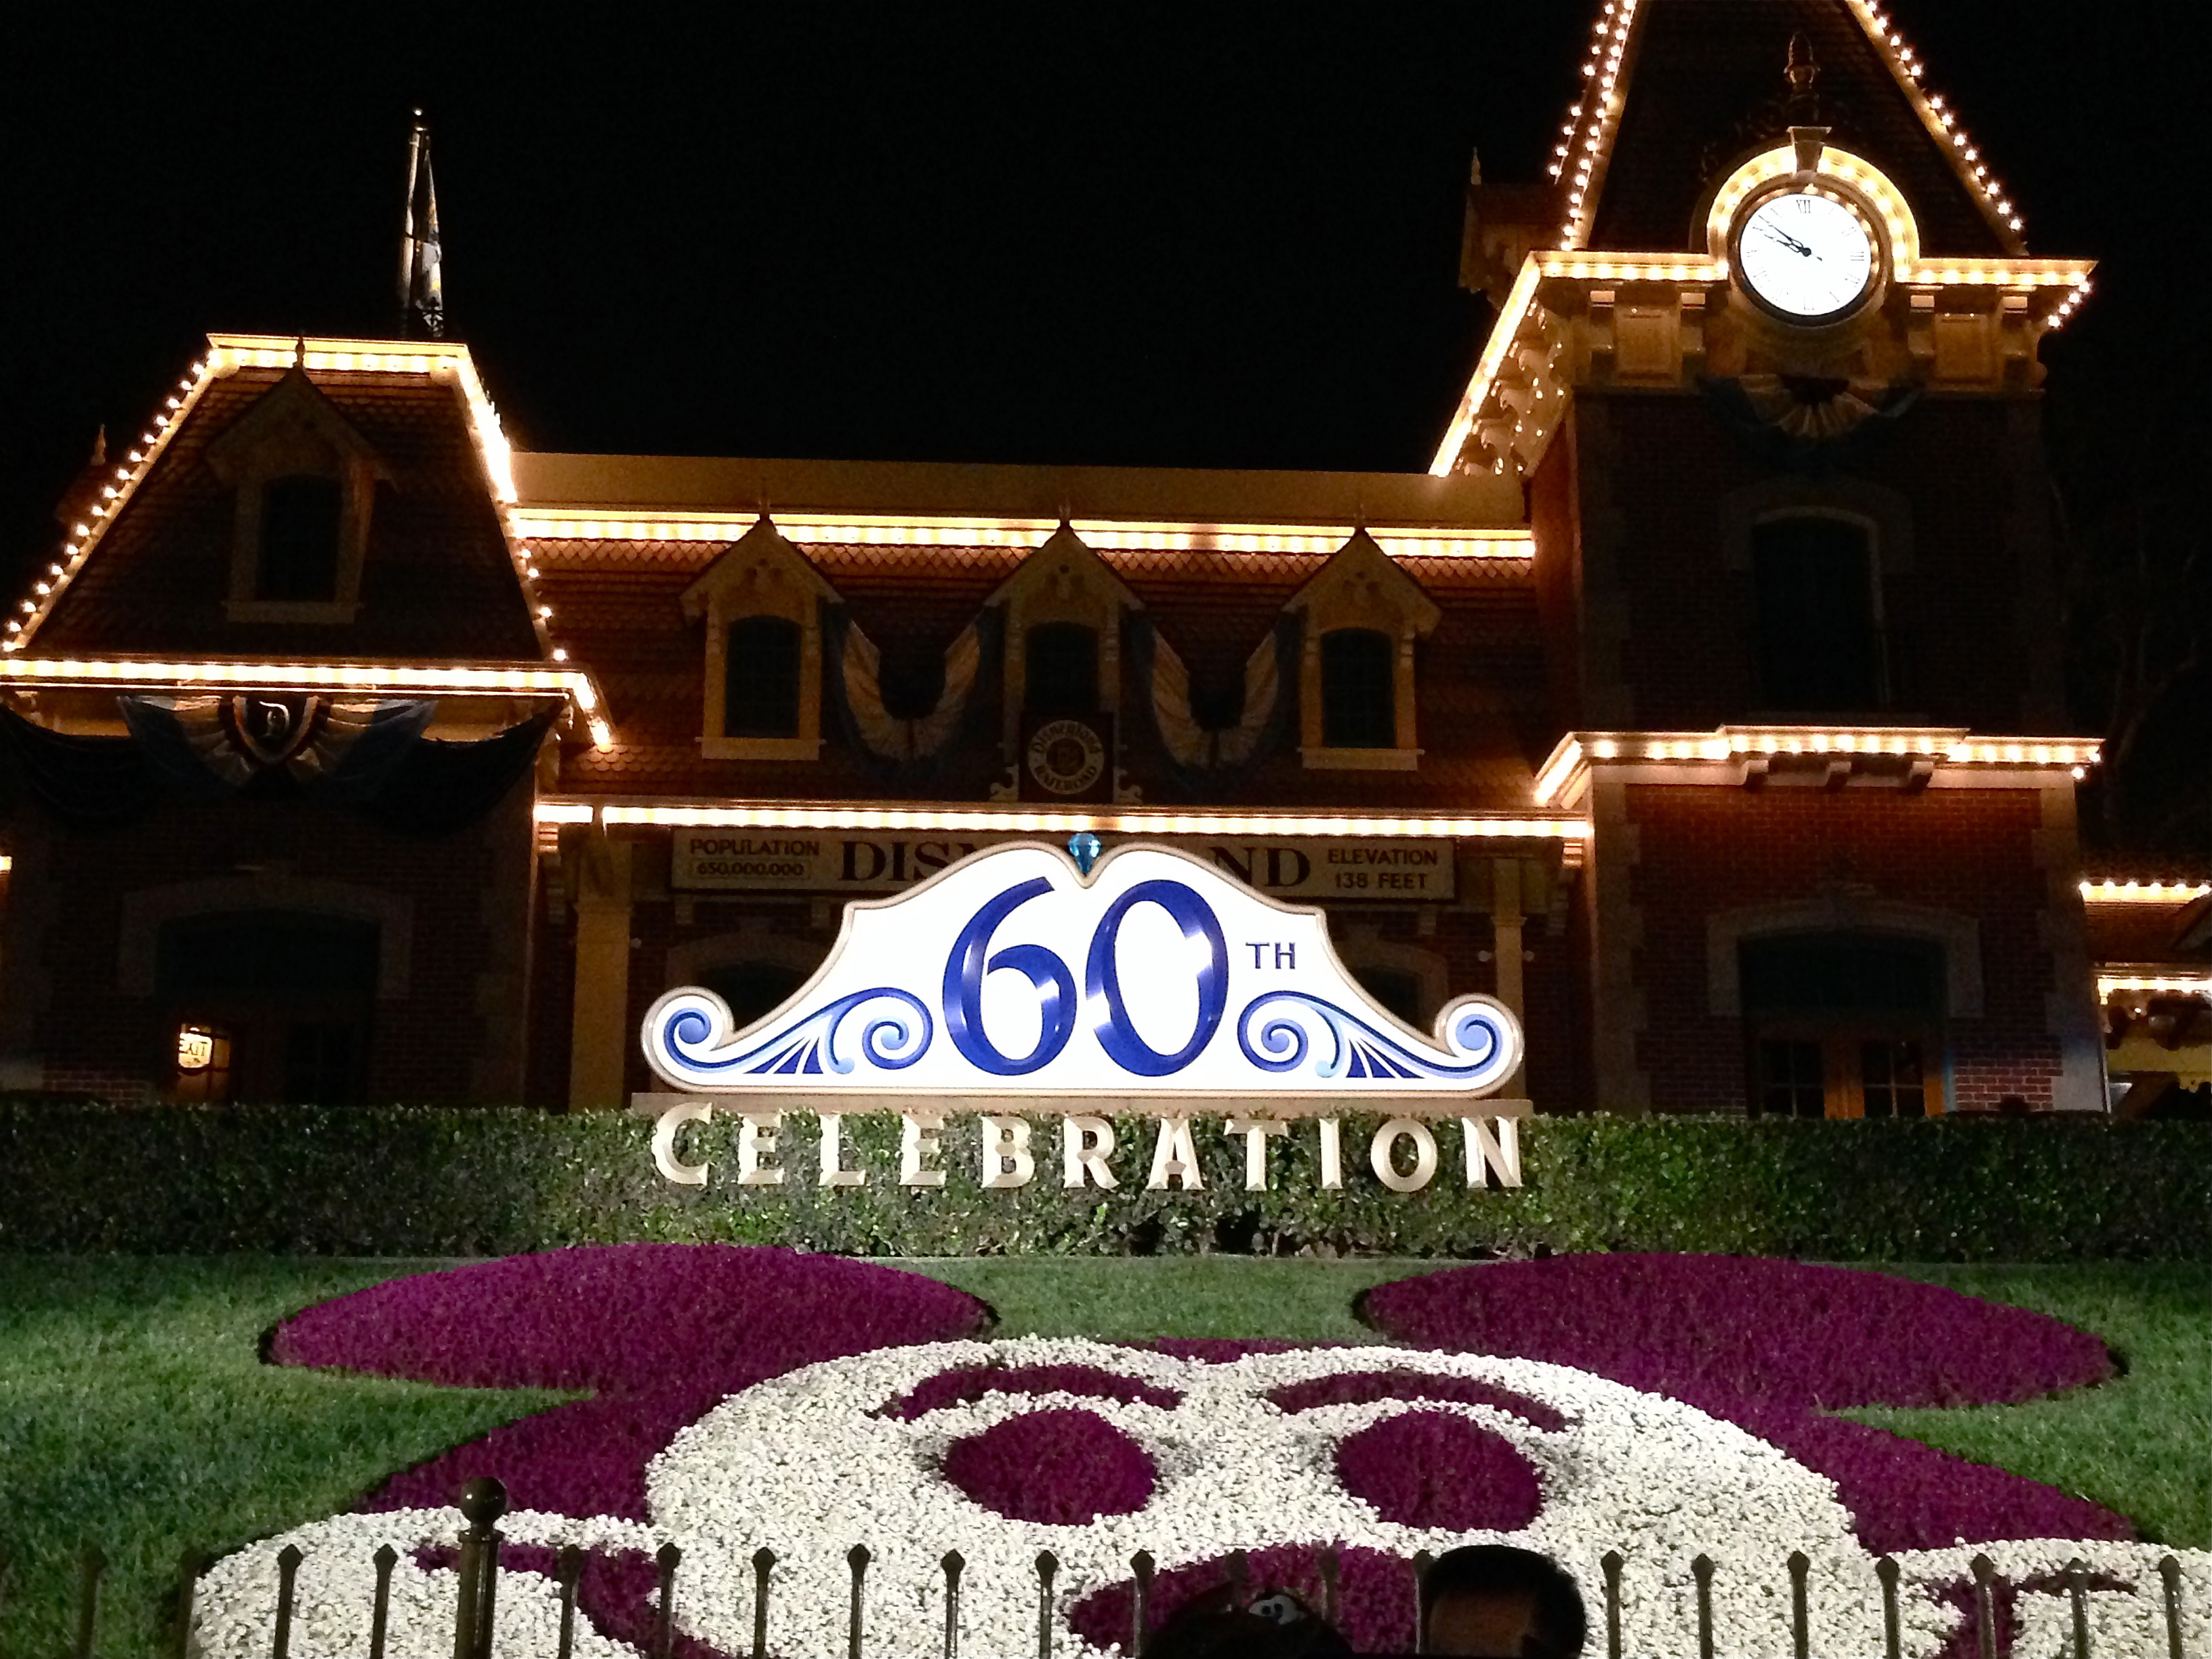 Visiting Disneyland's 60th Celebration with Kids